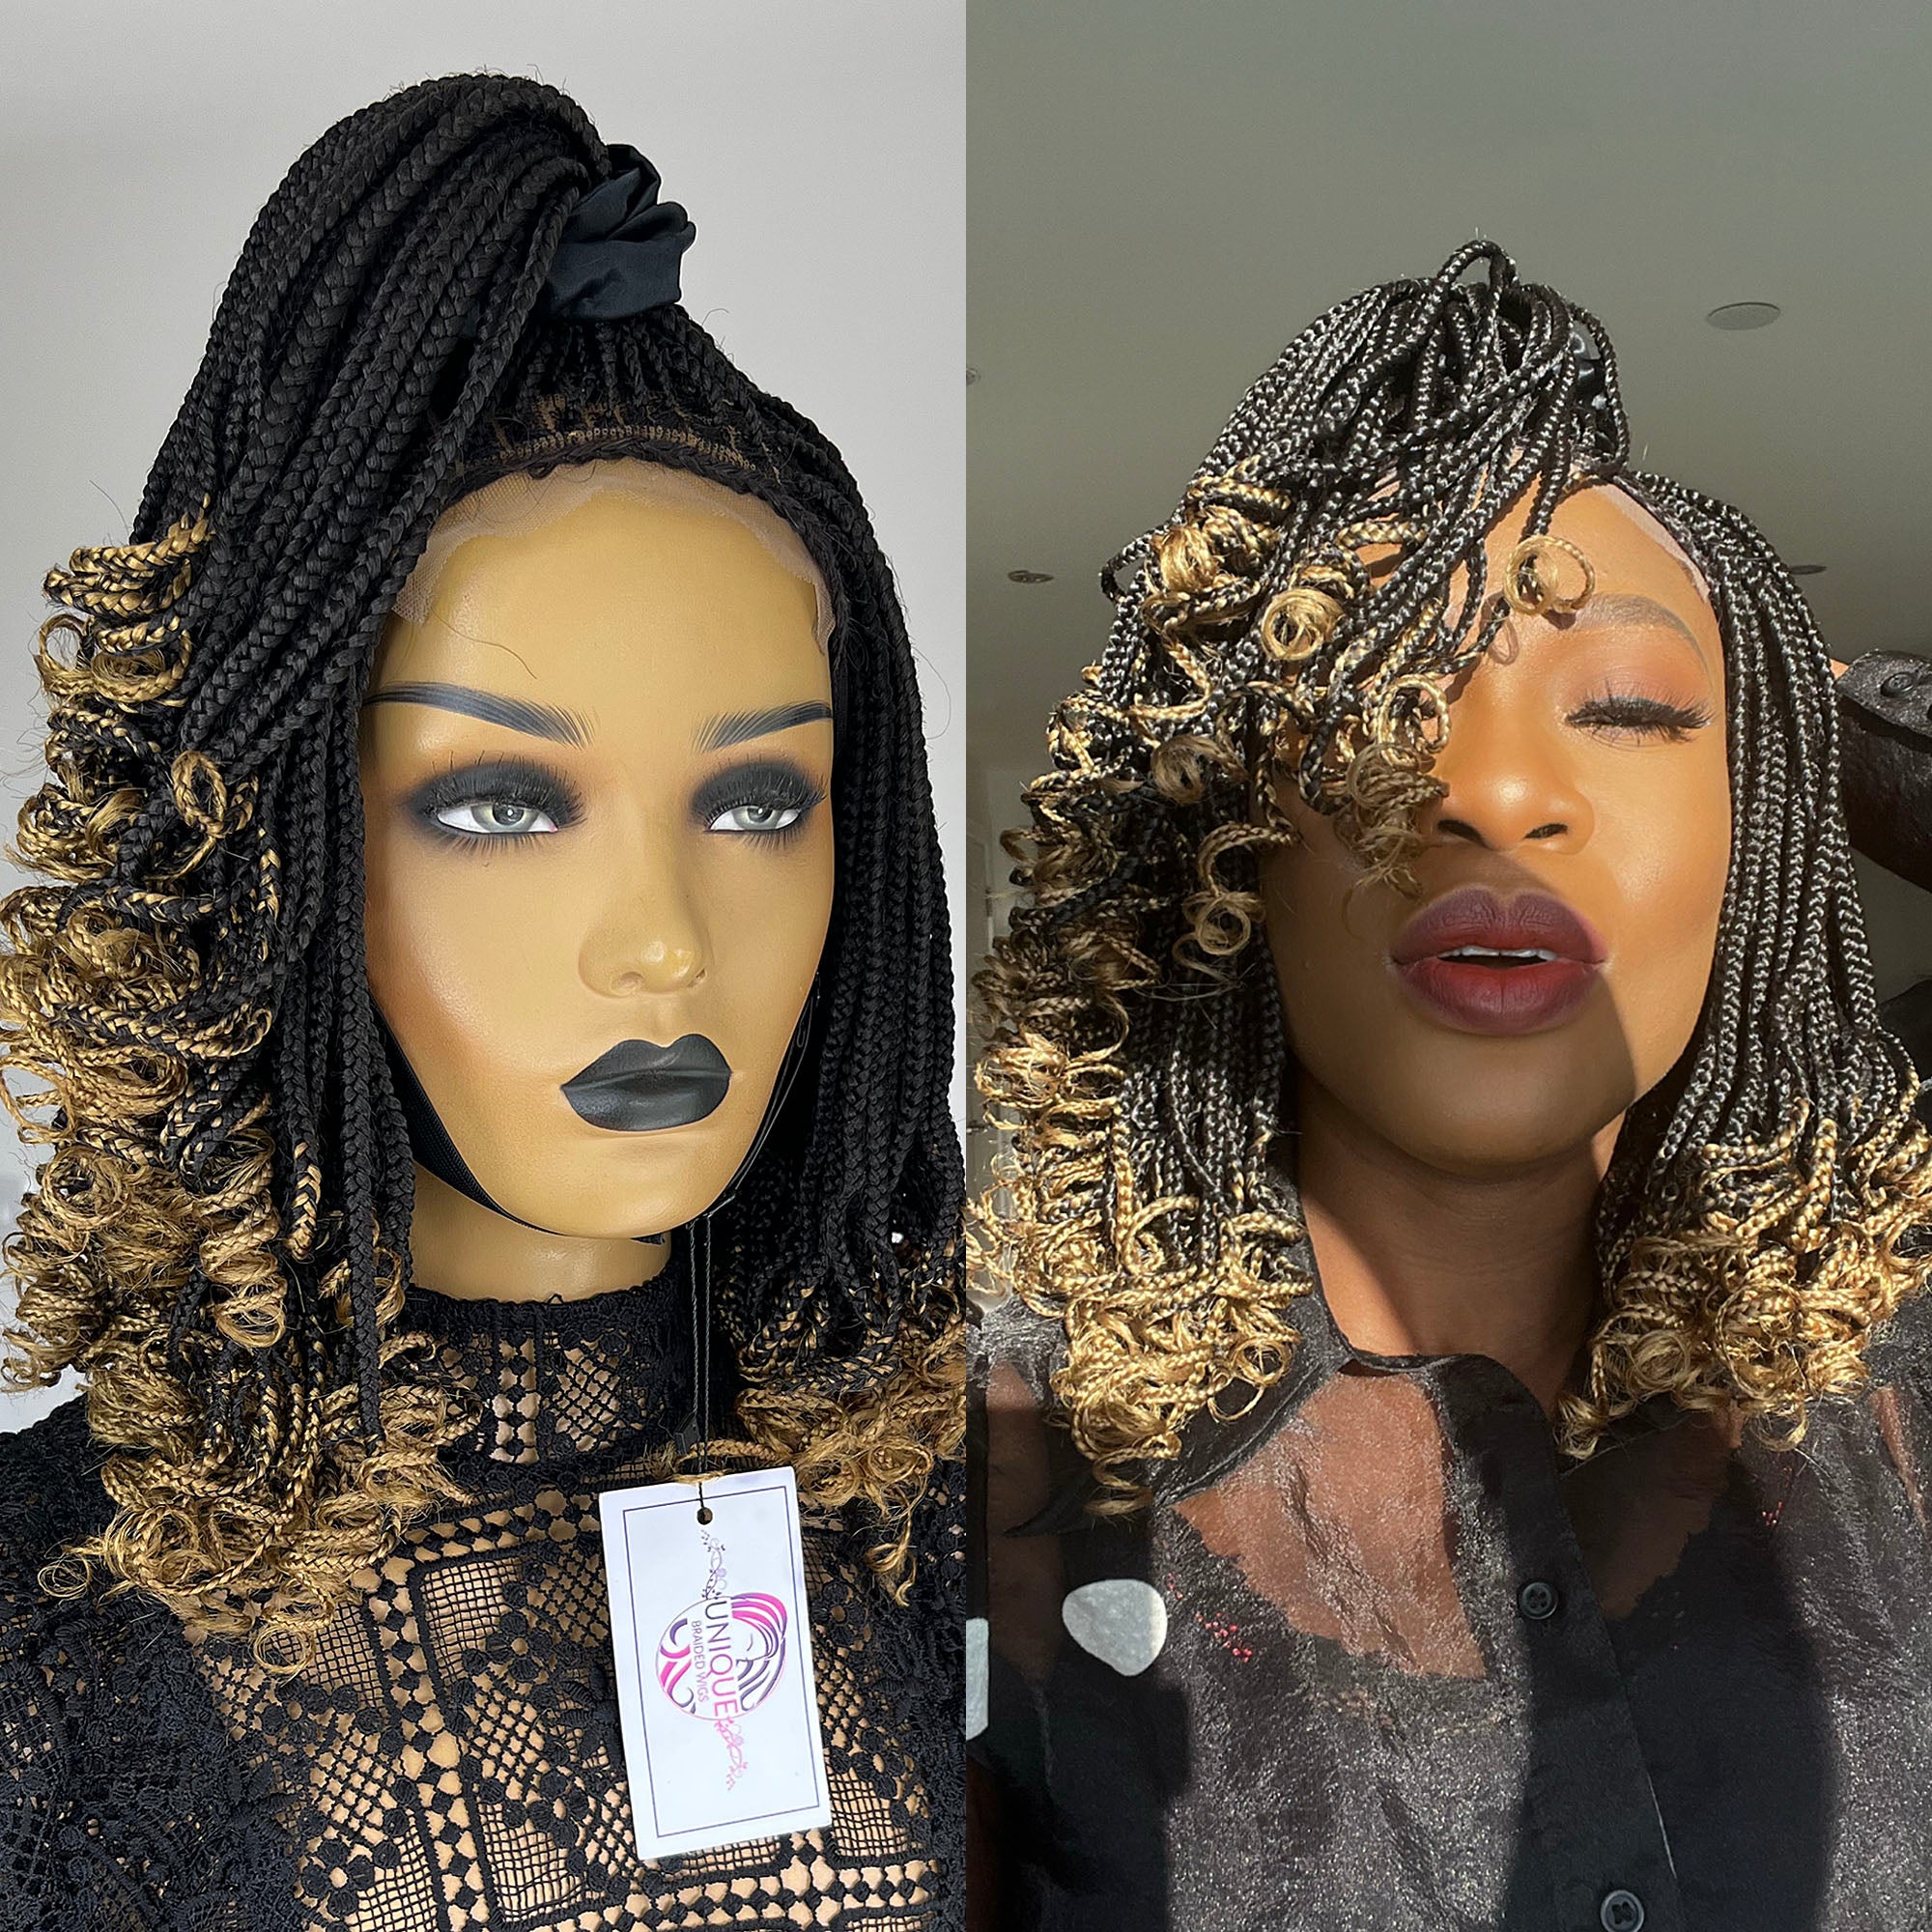 braided wig braided lace front wigs box braid wig frontal braids